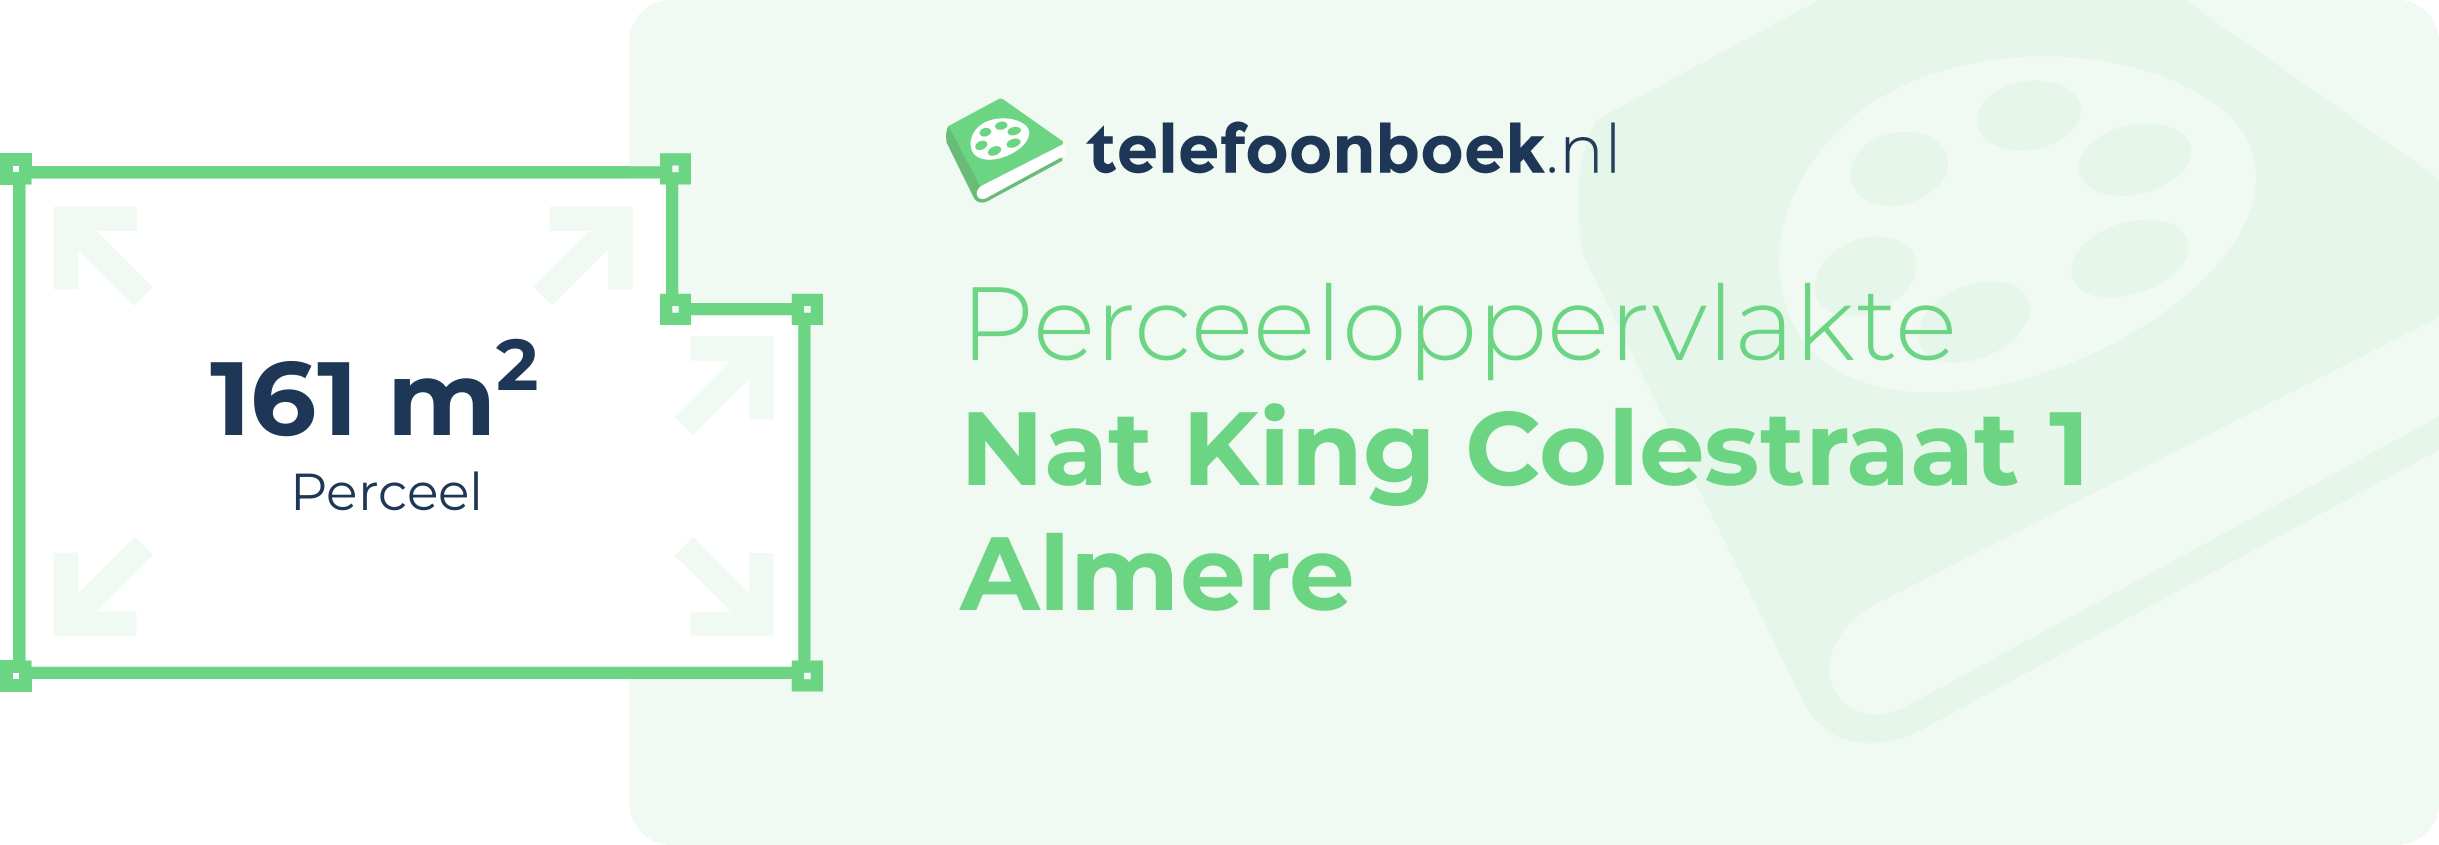 Perceeloppervlakte Nat King Colestraat 1 Almere